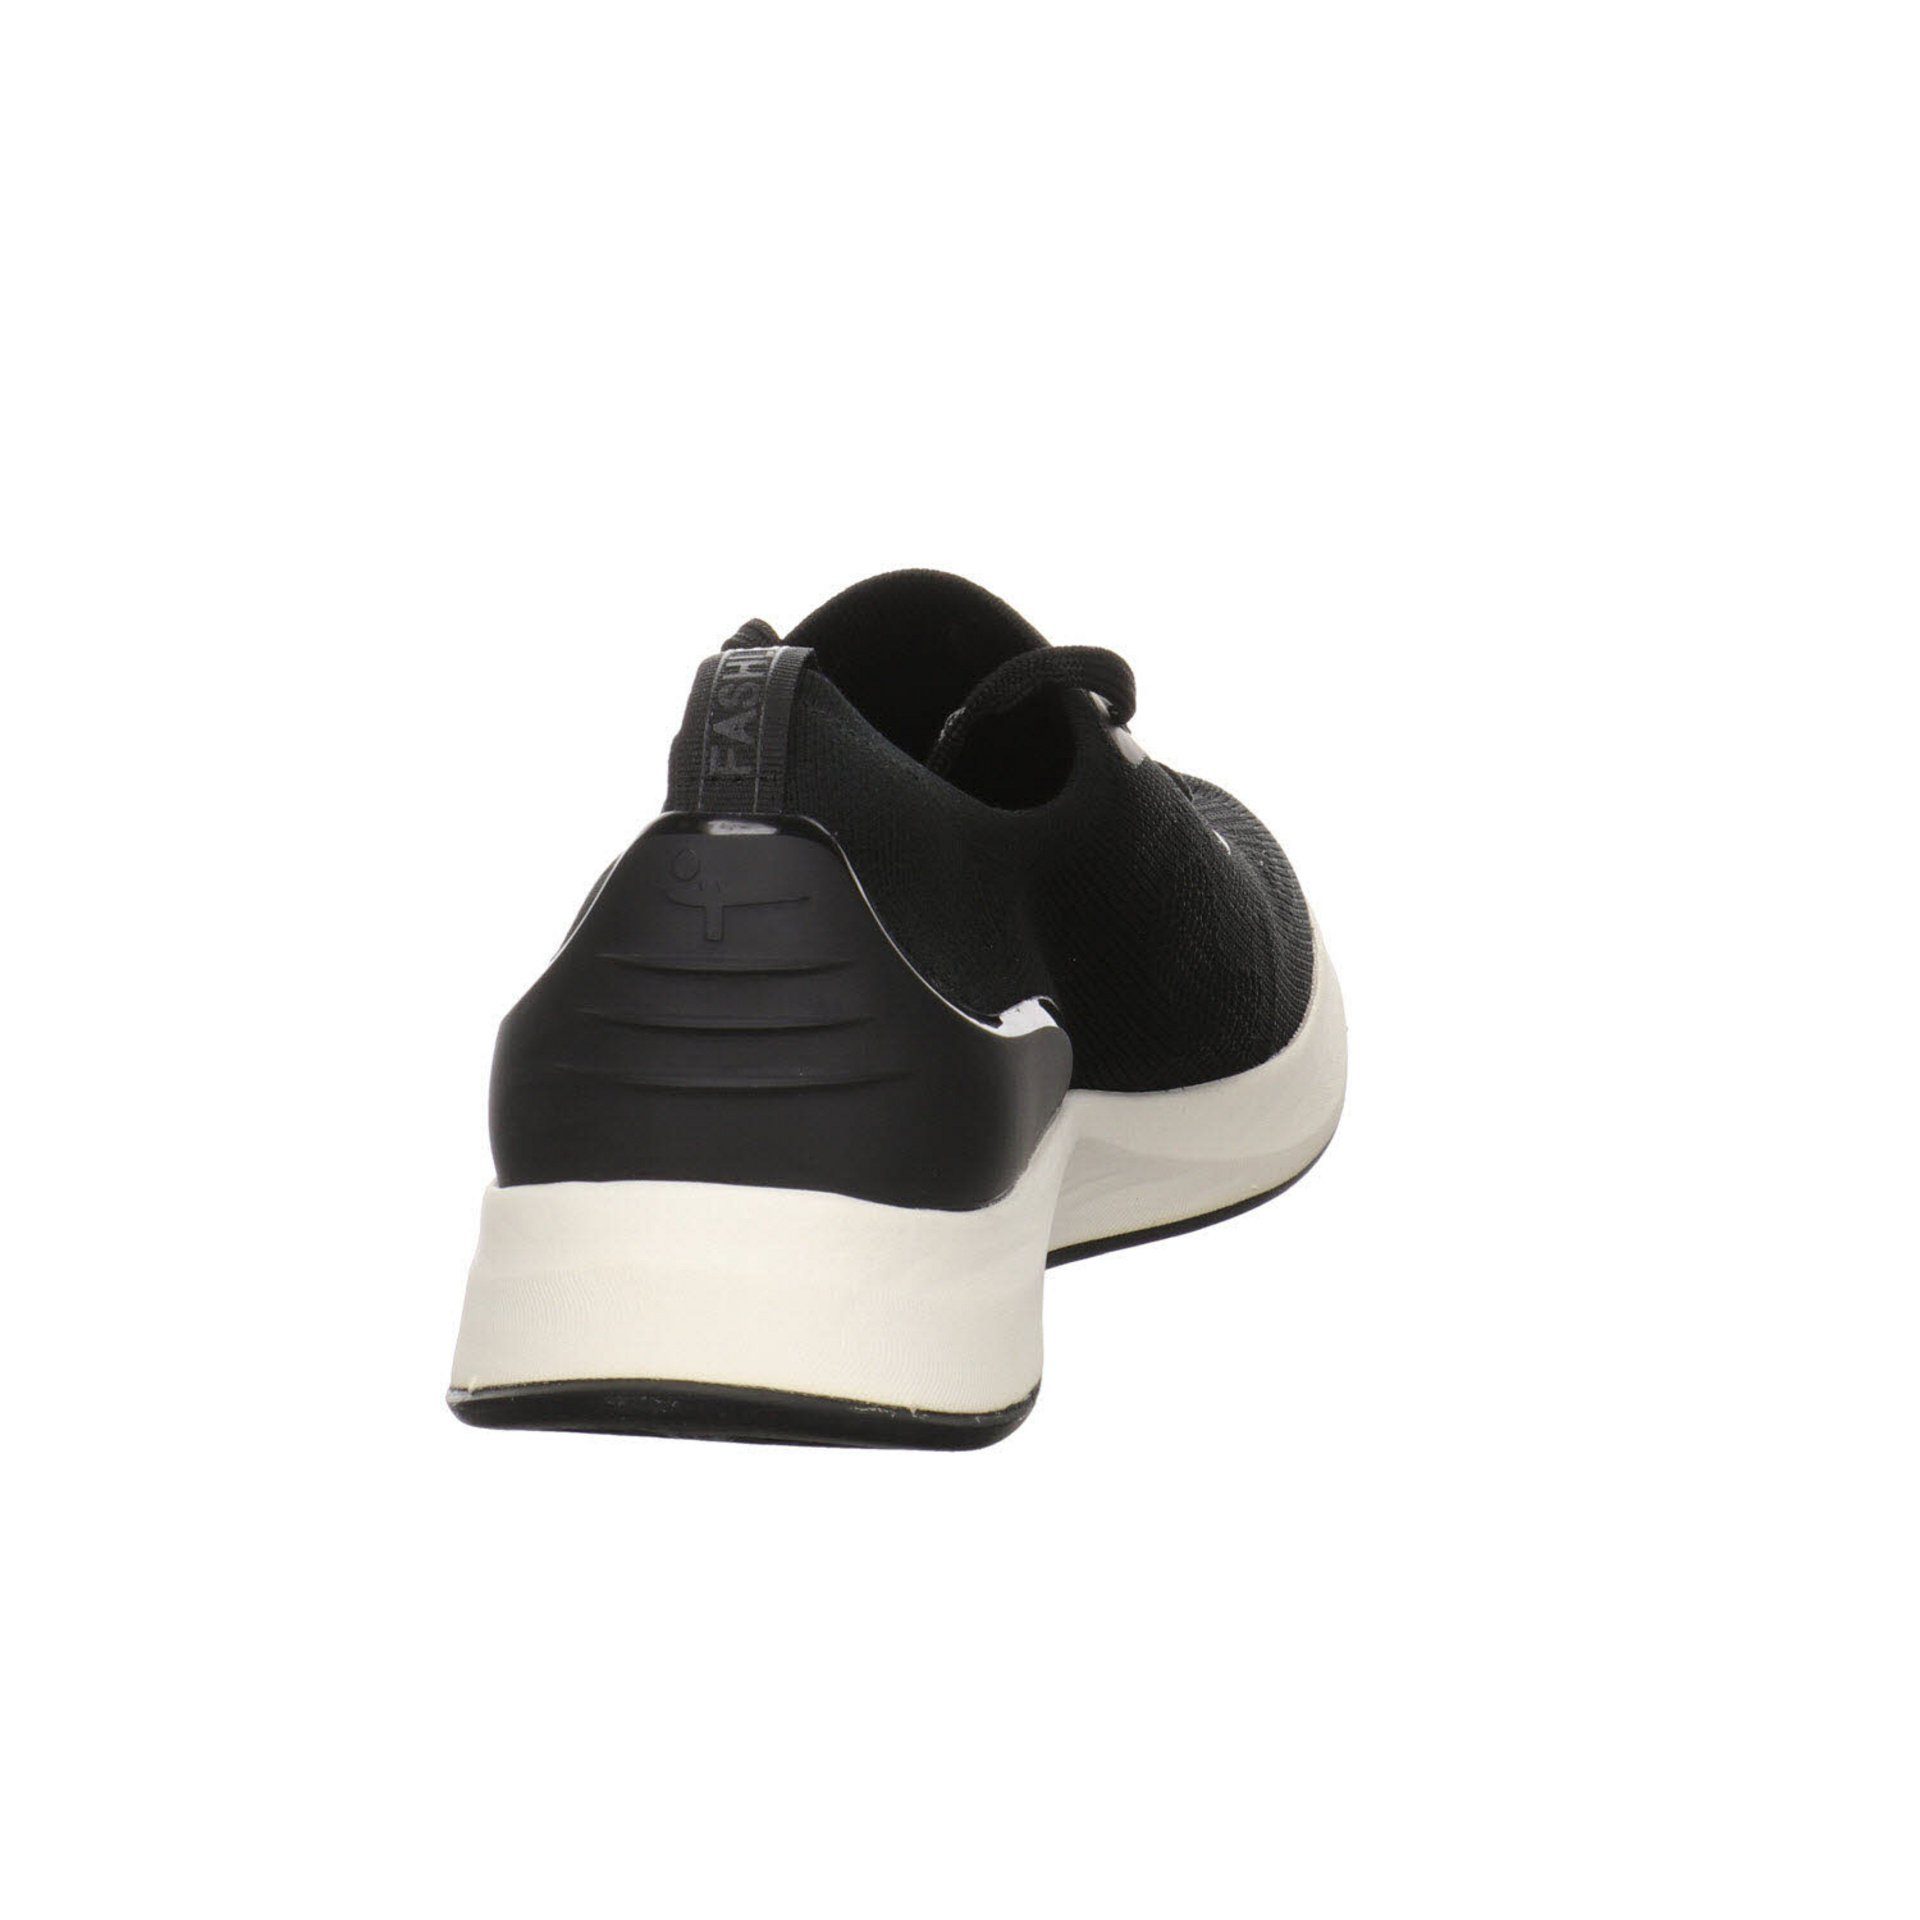 Damen Tamaris dunkel Sneaker Slip-On Schuhe Sneaker schwarz Sneaker Textil